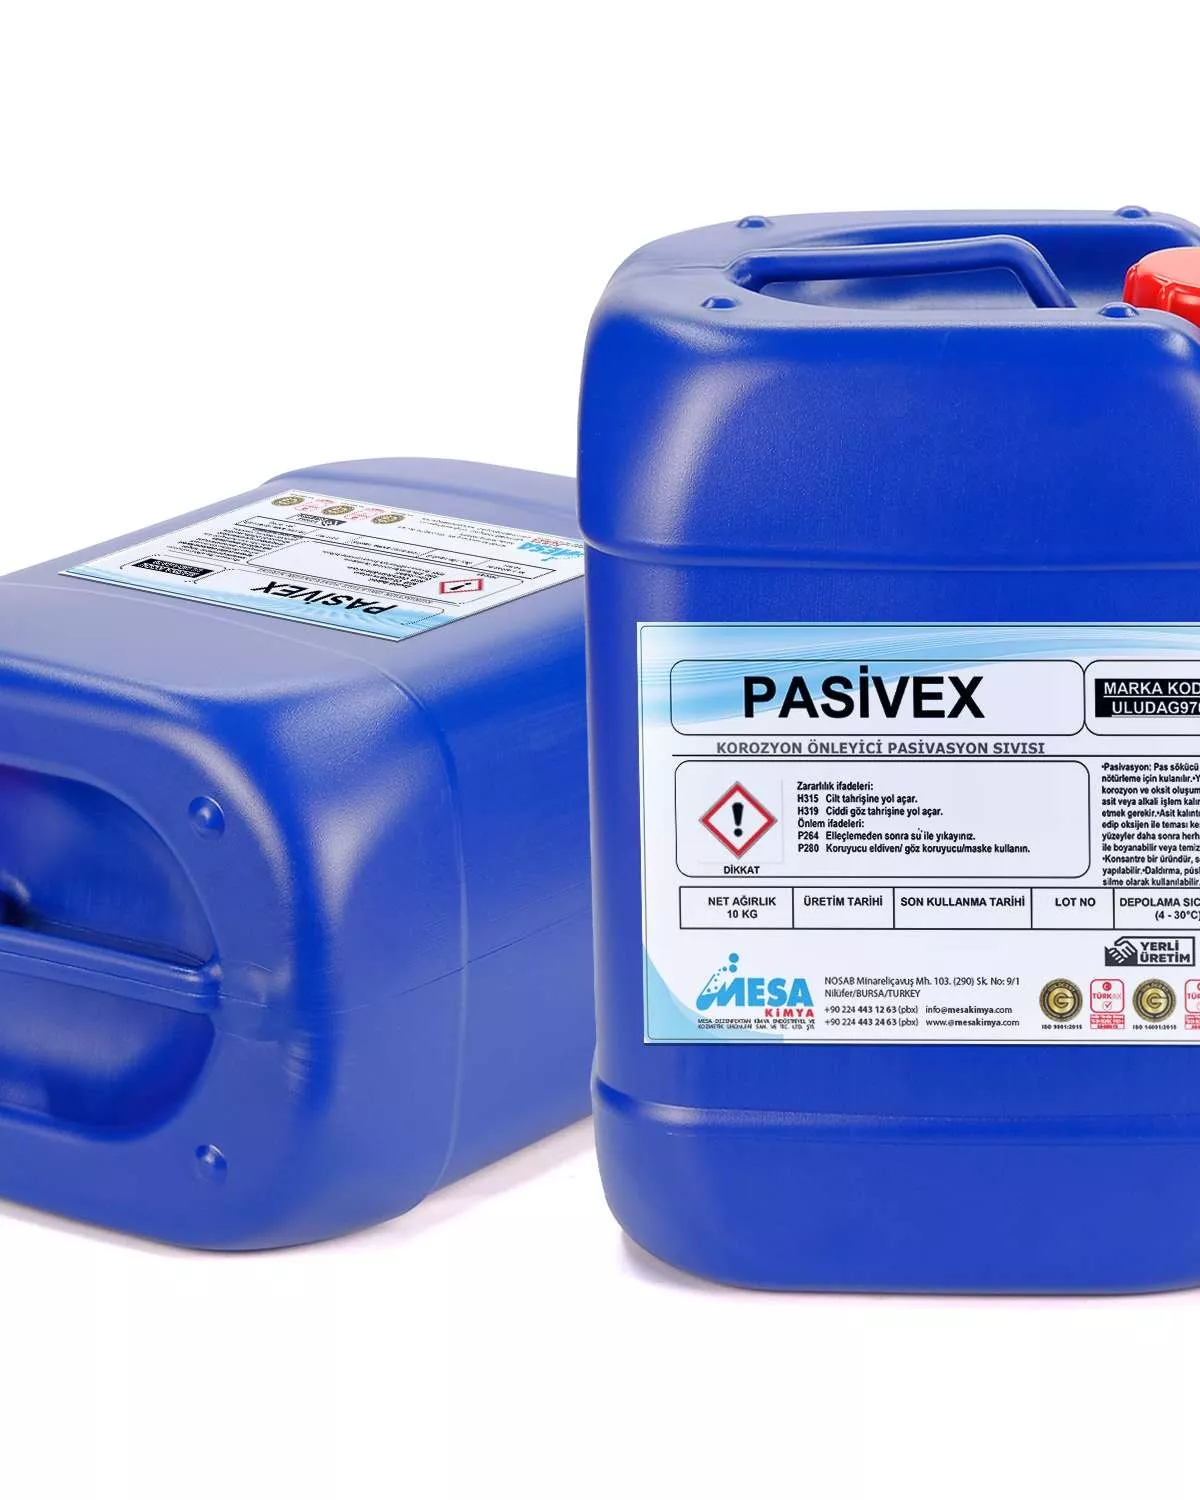 Pasivasyon kimyasalları Pasivex